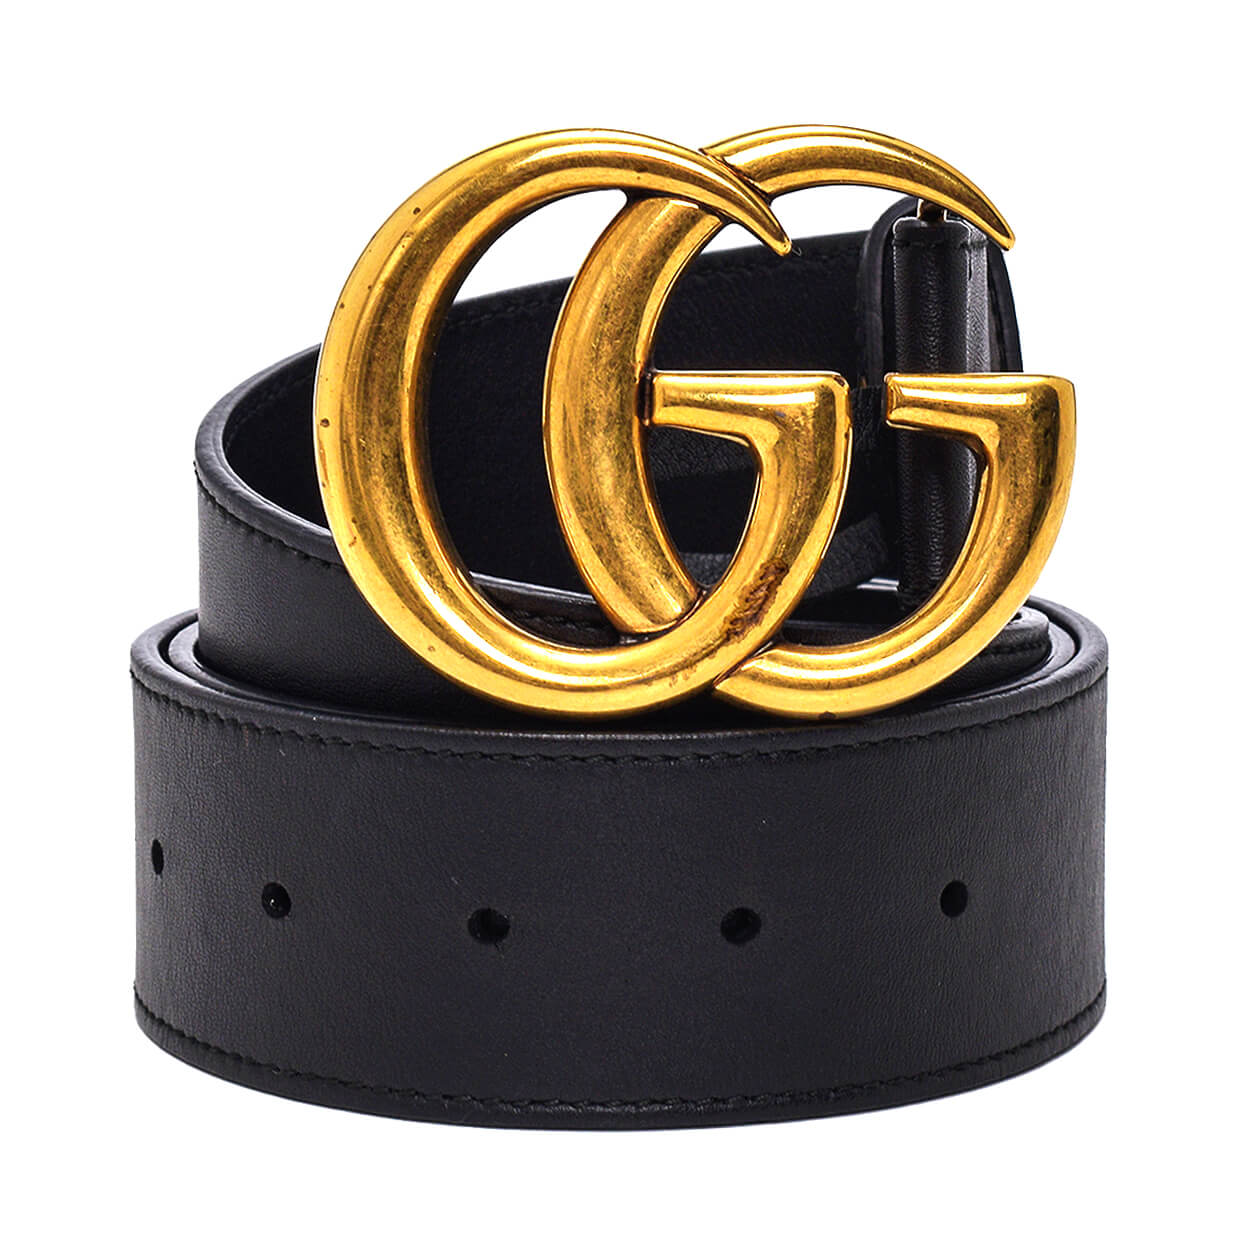 Gucci - Black Leather GG Buckle Belt